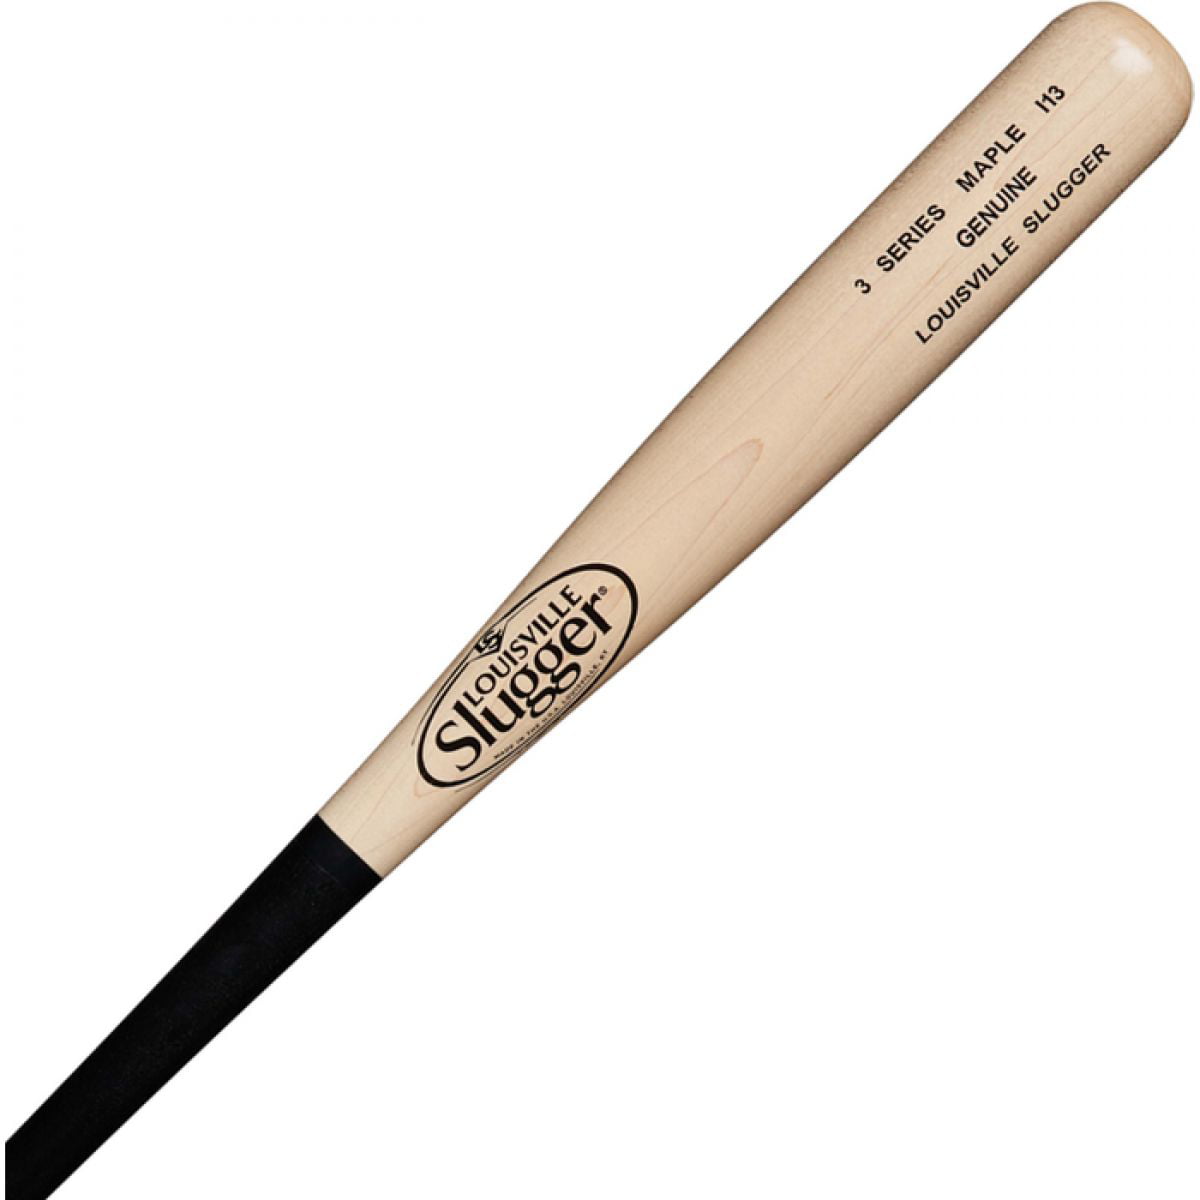 Louisville Slugger M110 Maple Pink Wood Baseball Bat